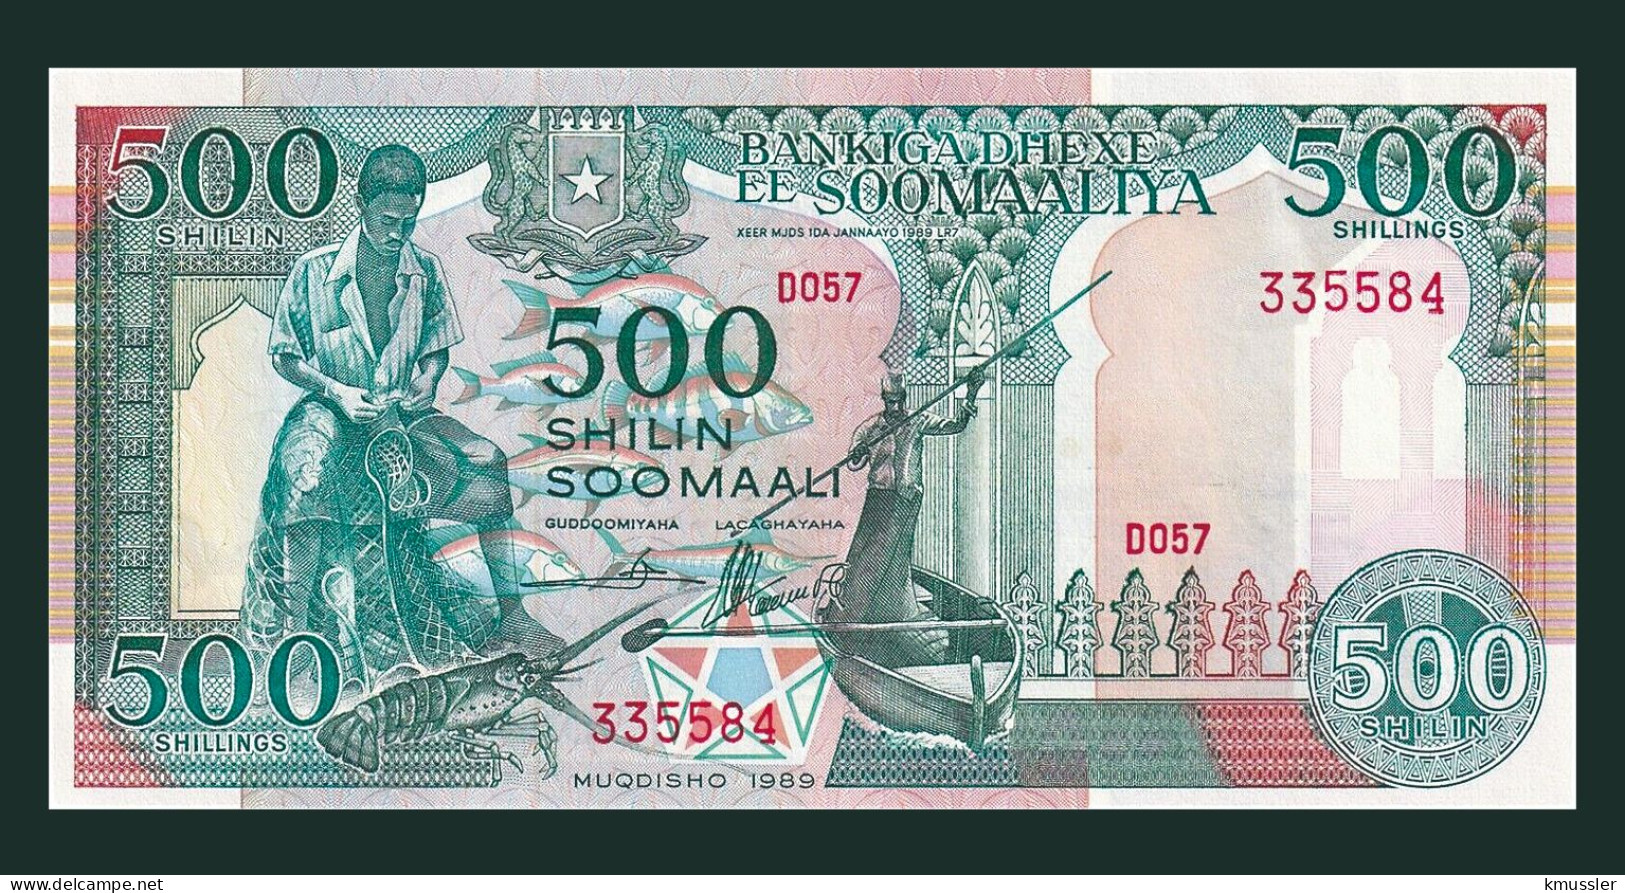 # # # Banknote Aus Somalia 500 Shillings 1989 (P-36) UNC # # # - Somalia